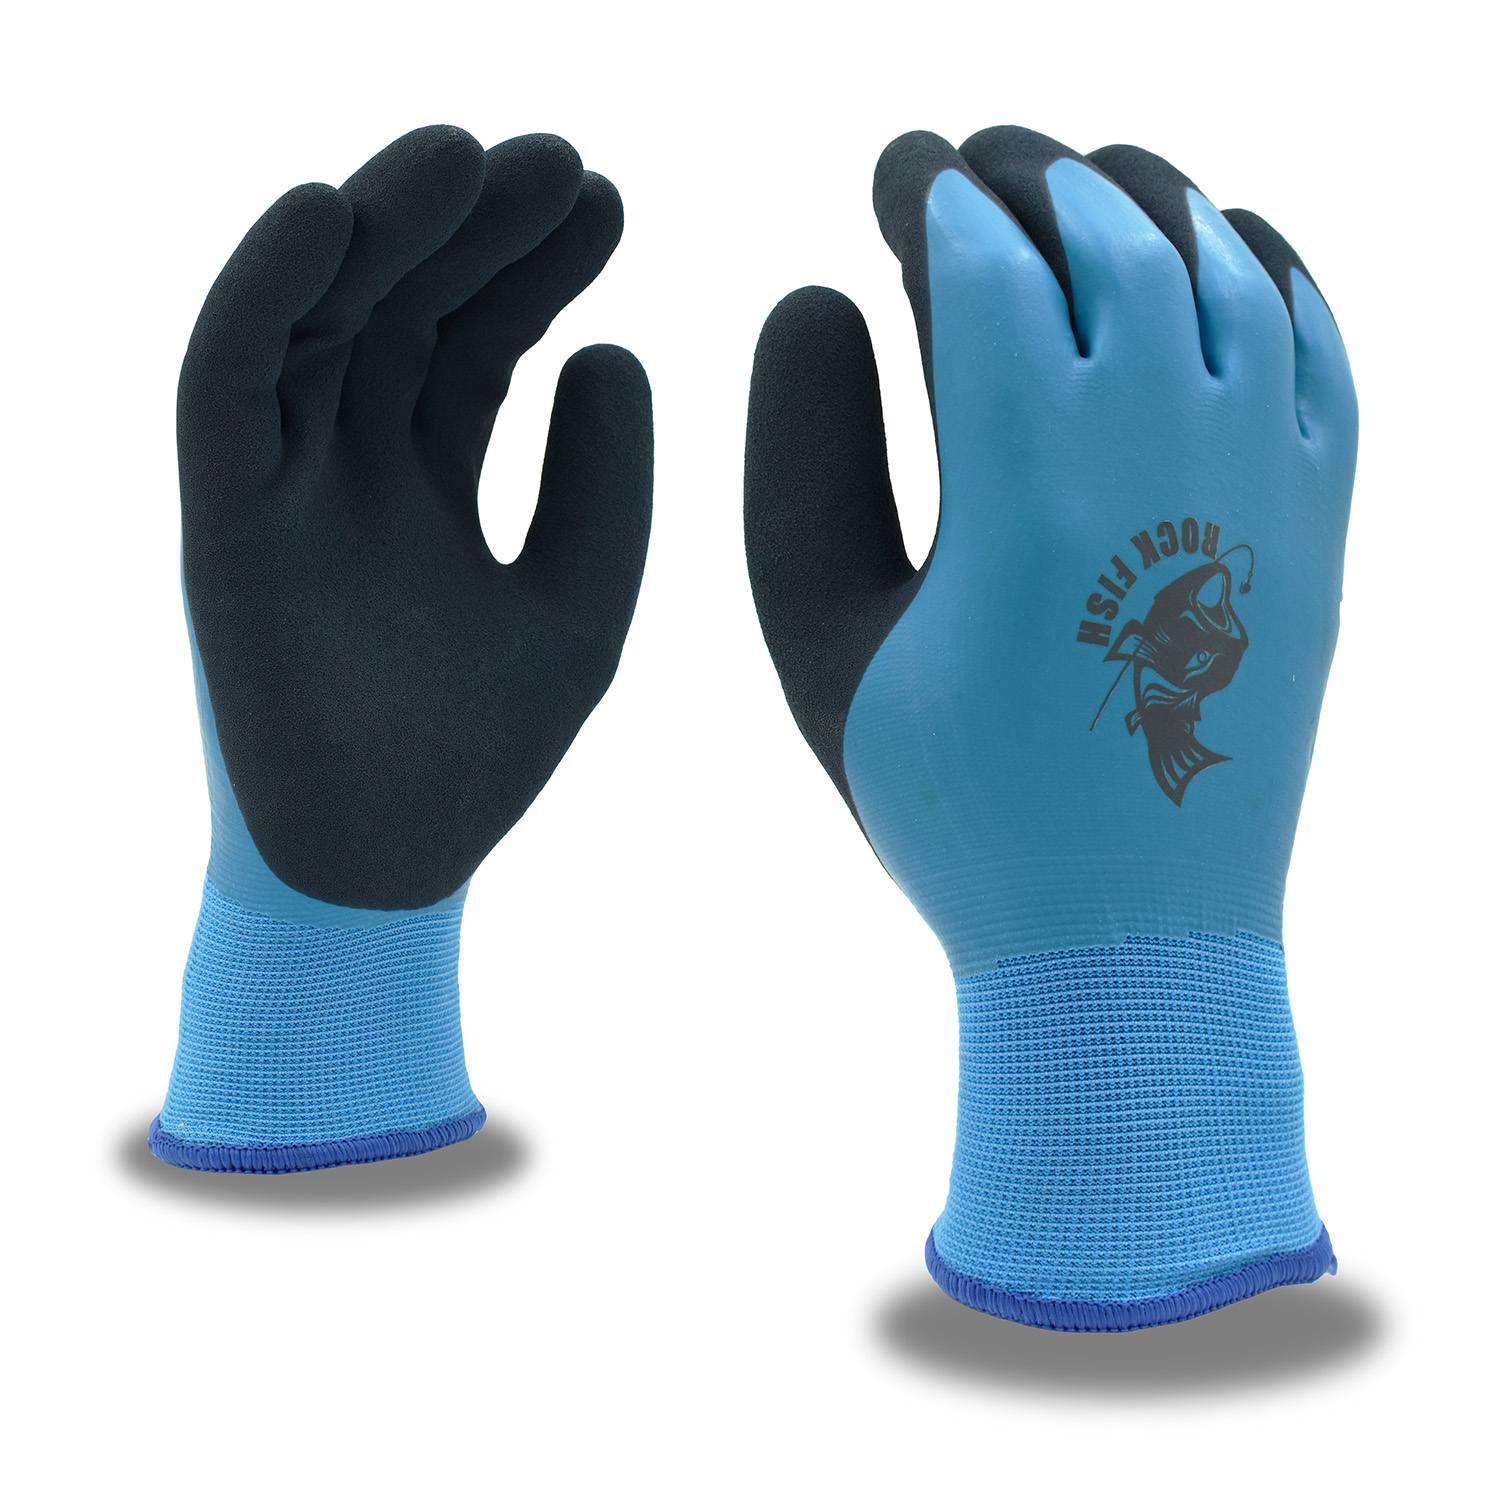 Teton Tenkara: Cold fingers? Try Rock Fish Thermo Gloves!